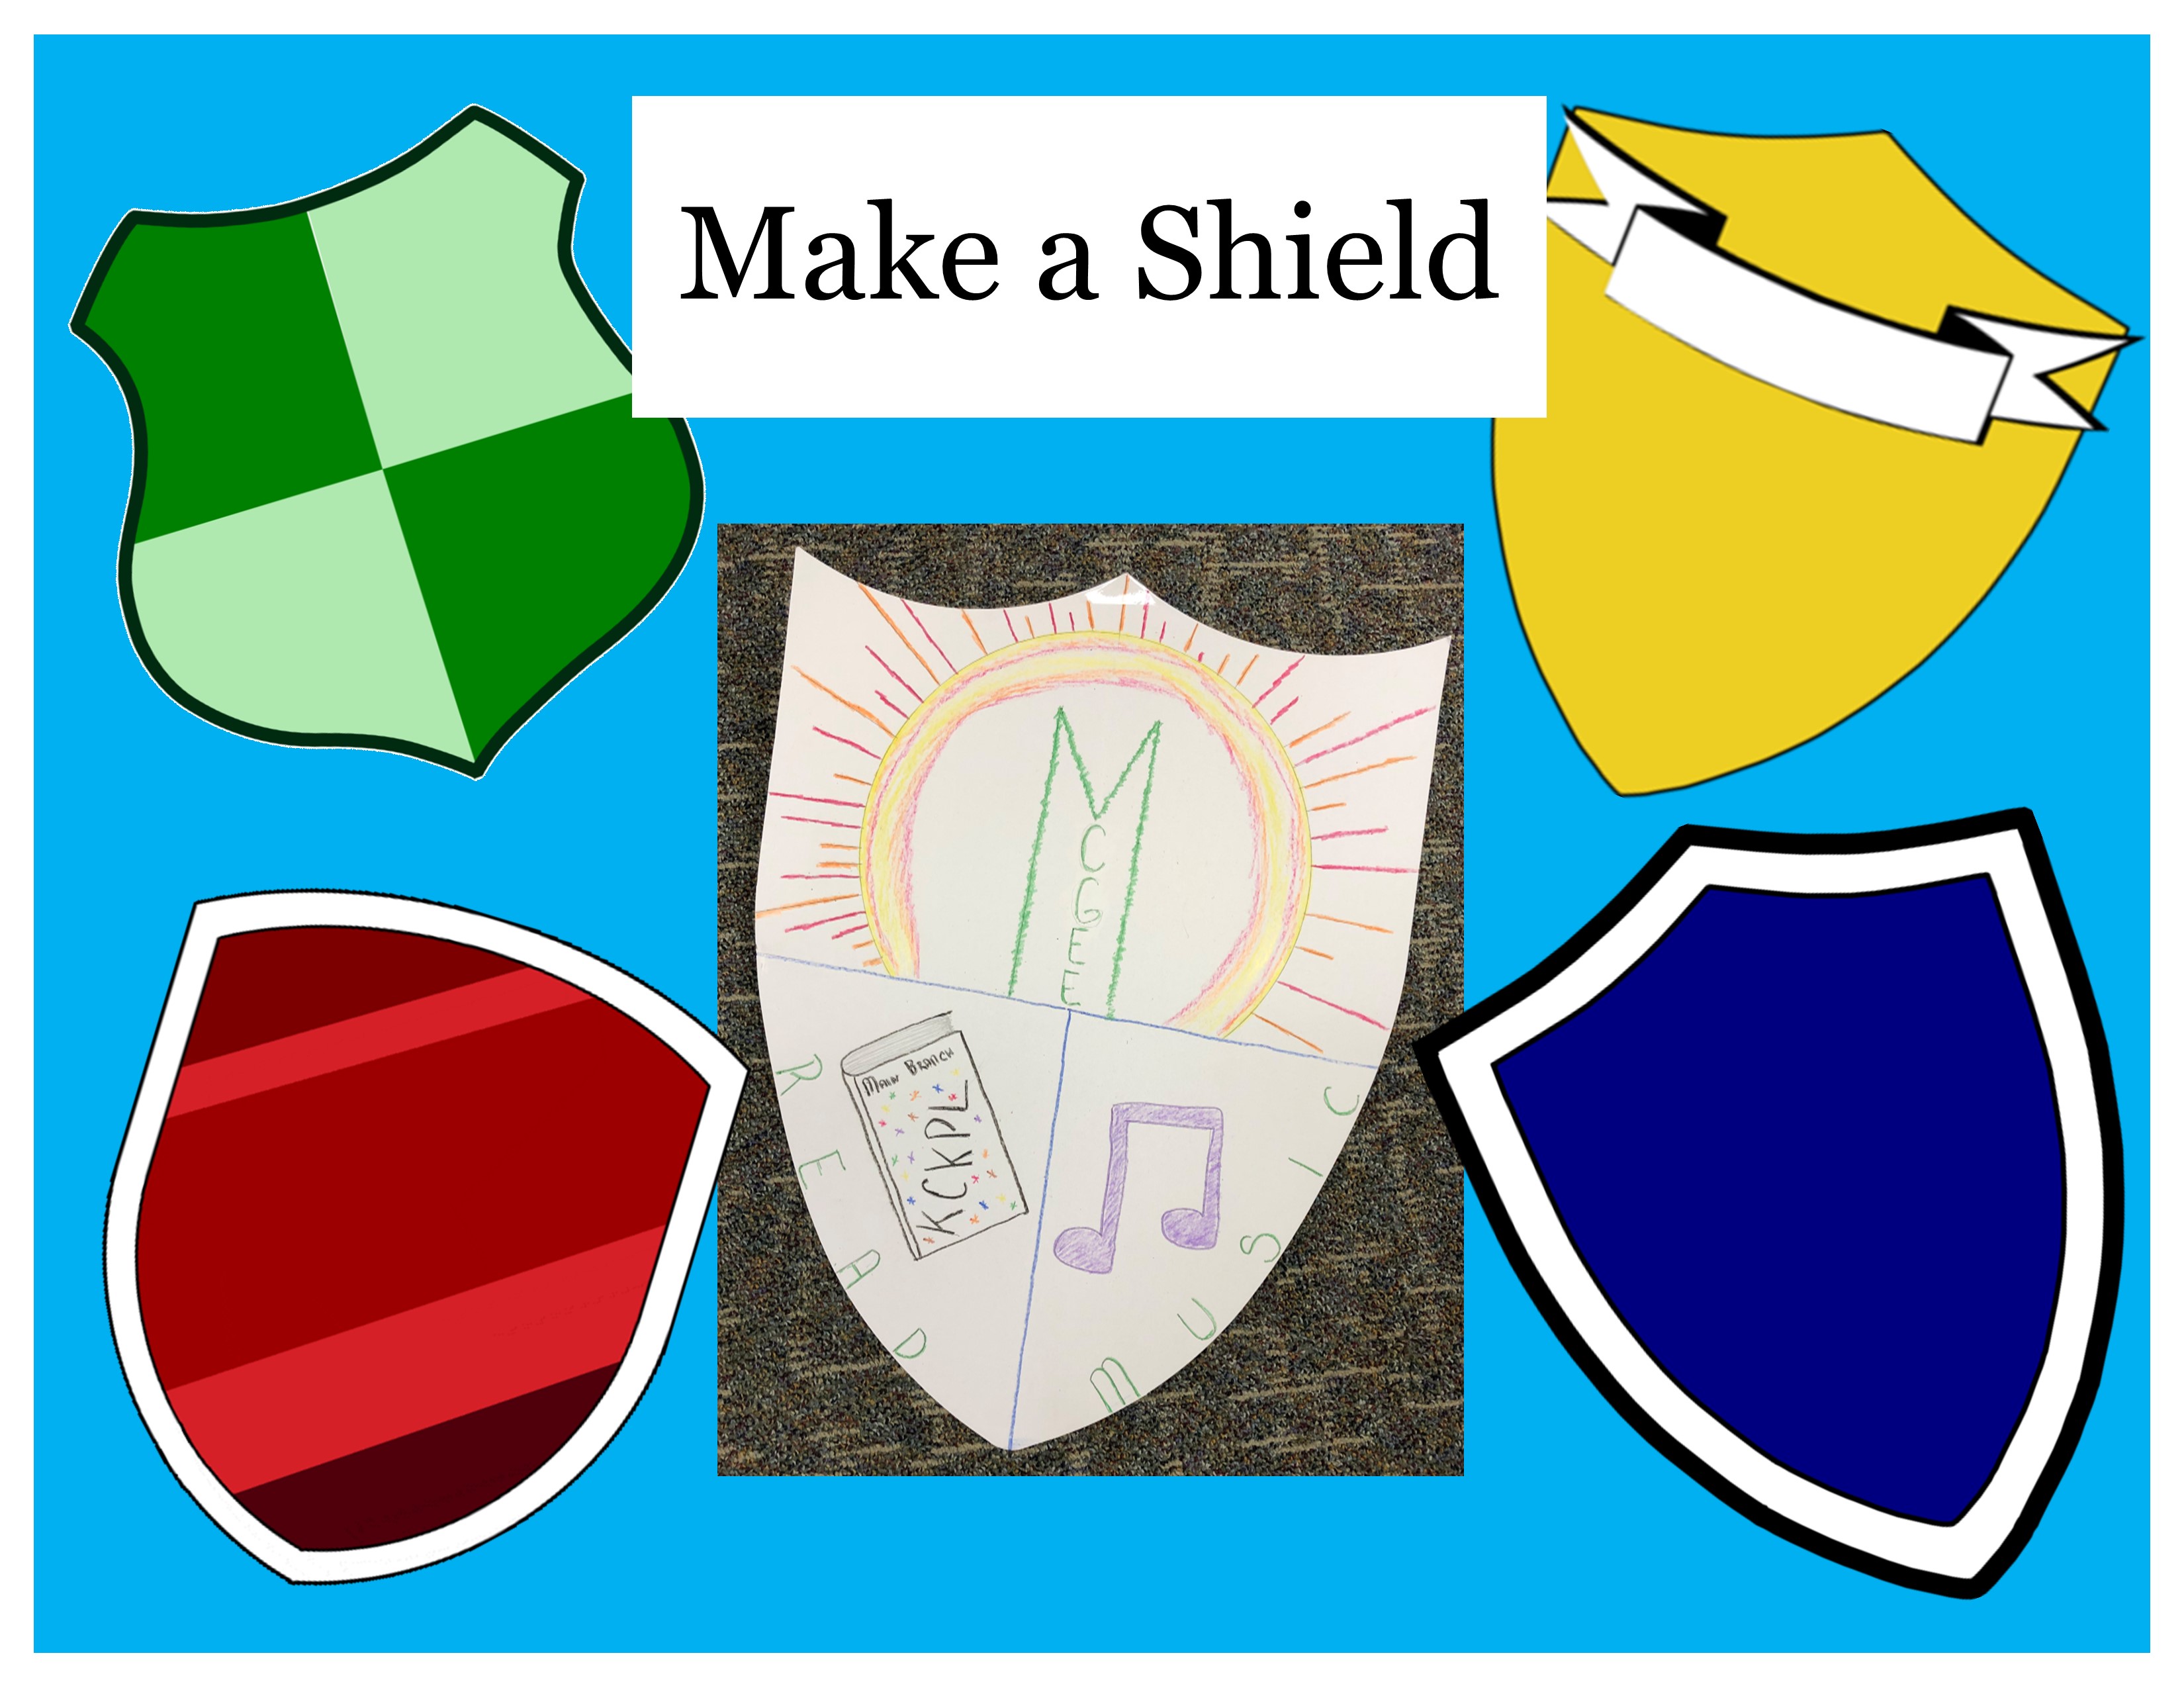 Make a shield.